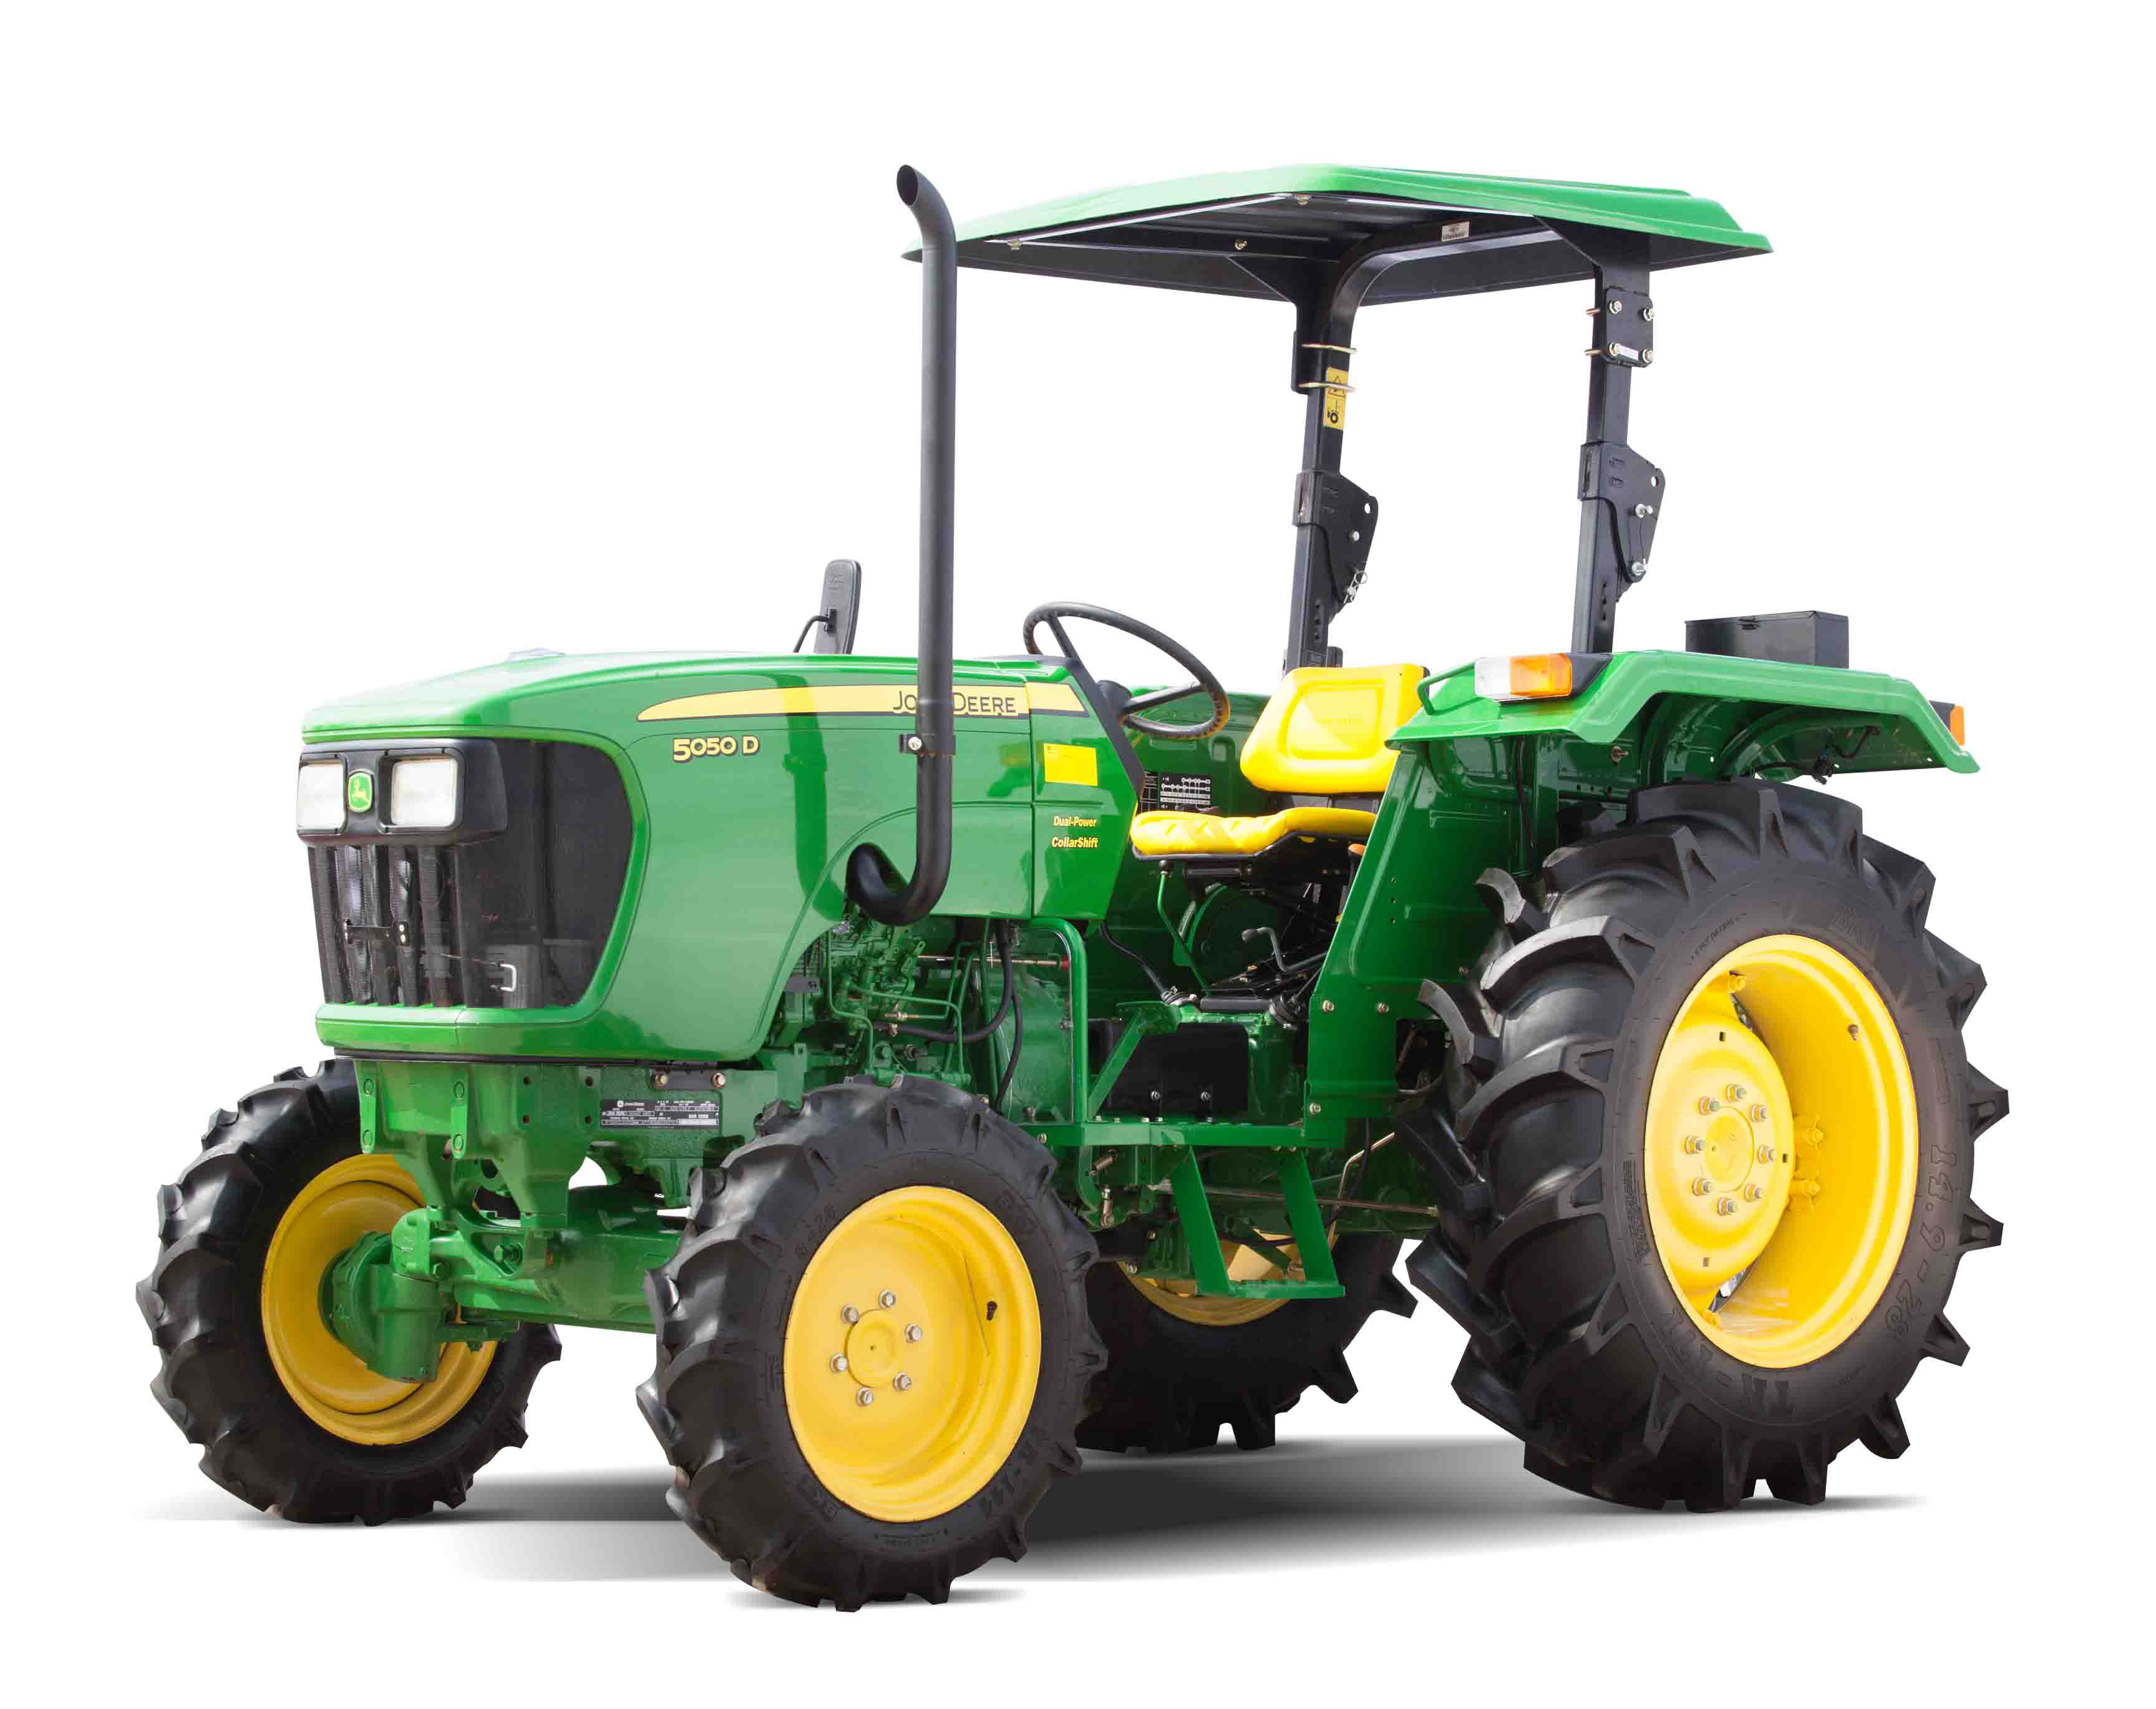 5050D Tractor | 5 Family Utility Tractors | John Deere Asia